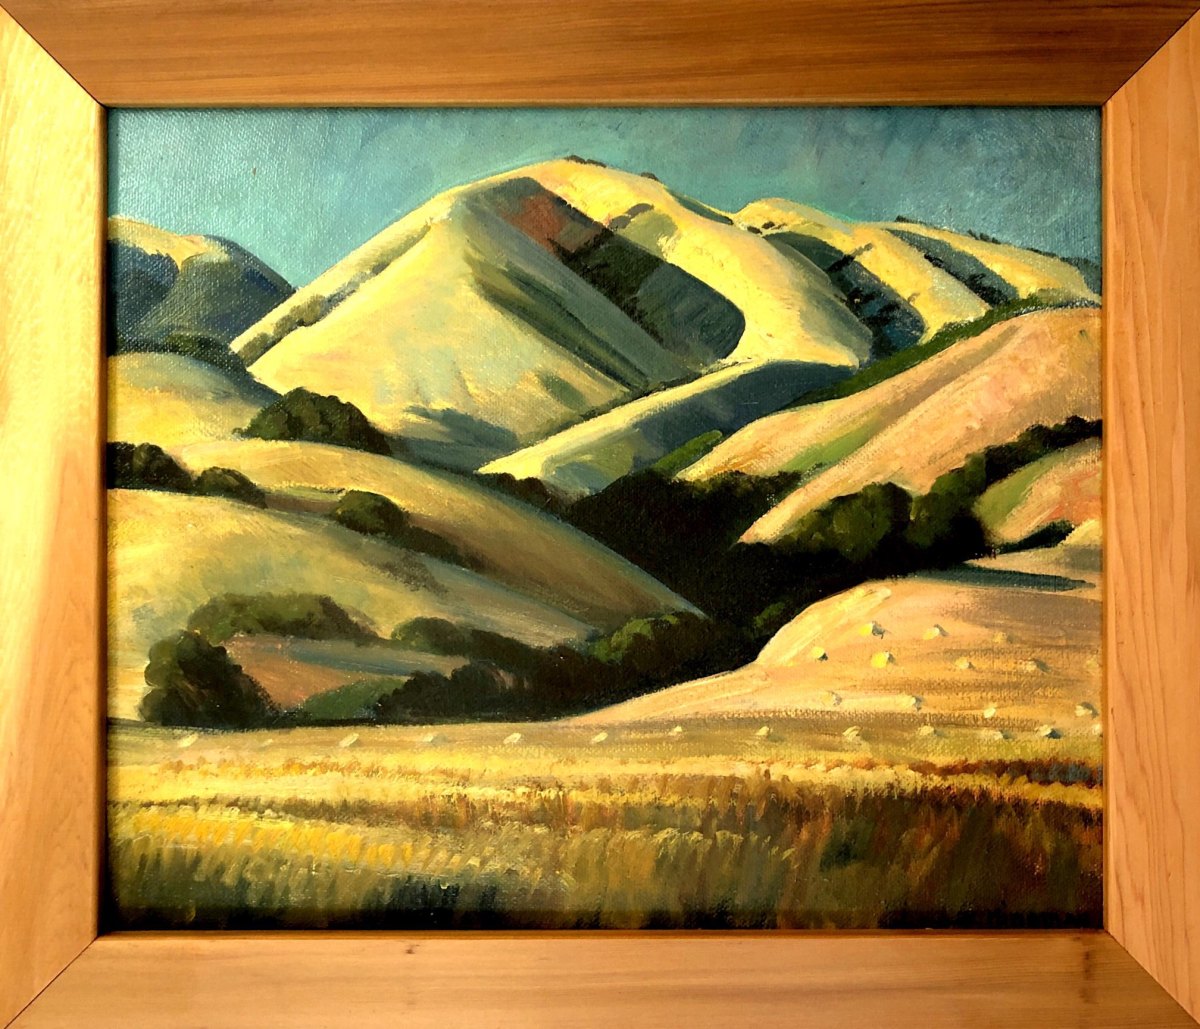 California Hills  1938 (Sketch) by EUGENE KINGMAN 